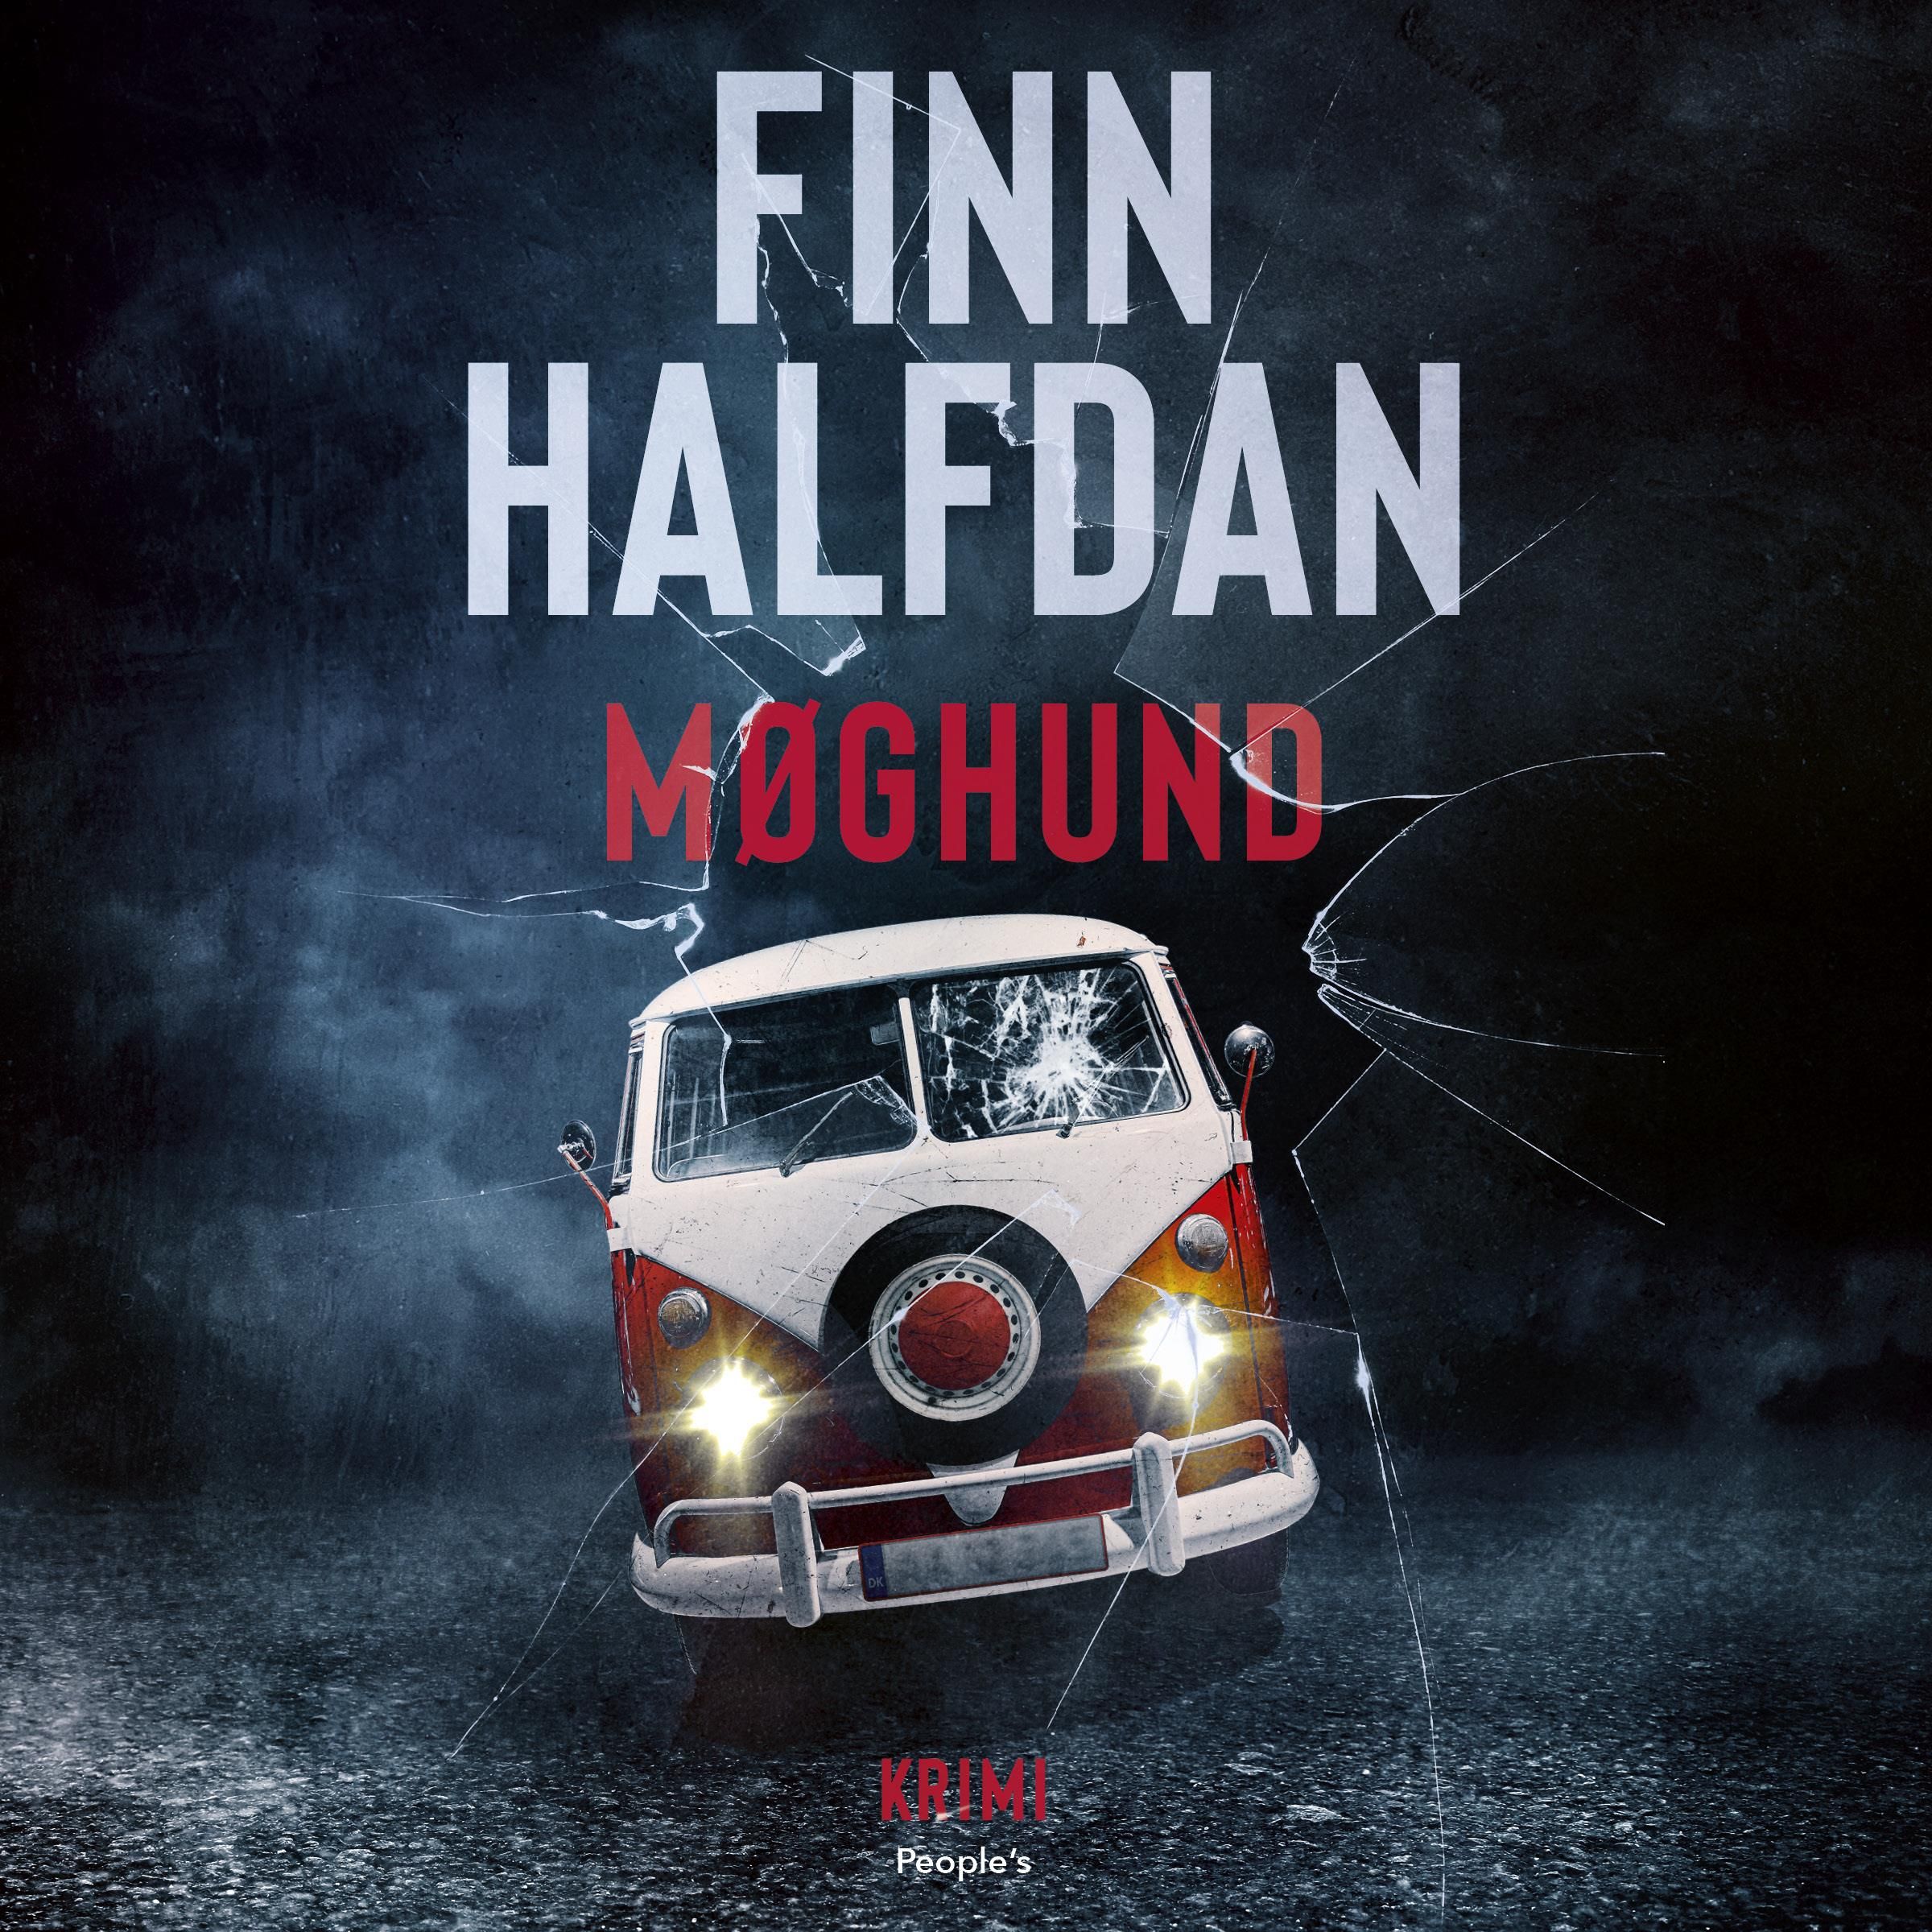 Møghund, lydbog af Finn Halfdan